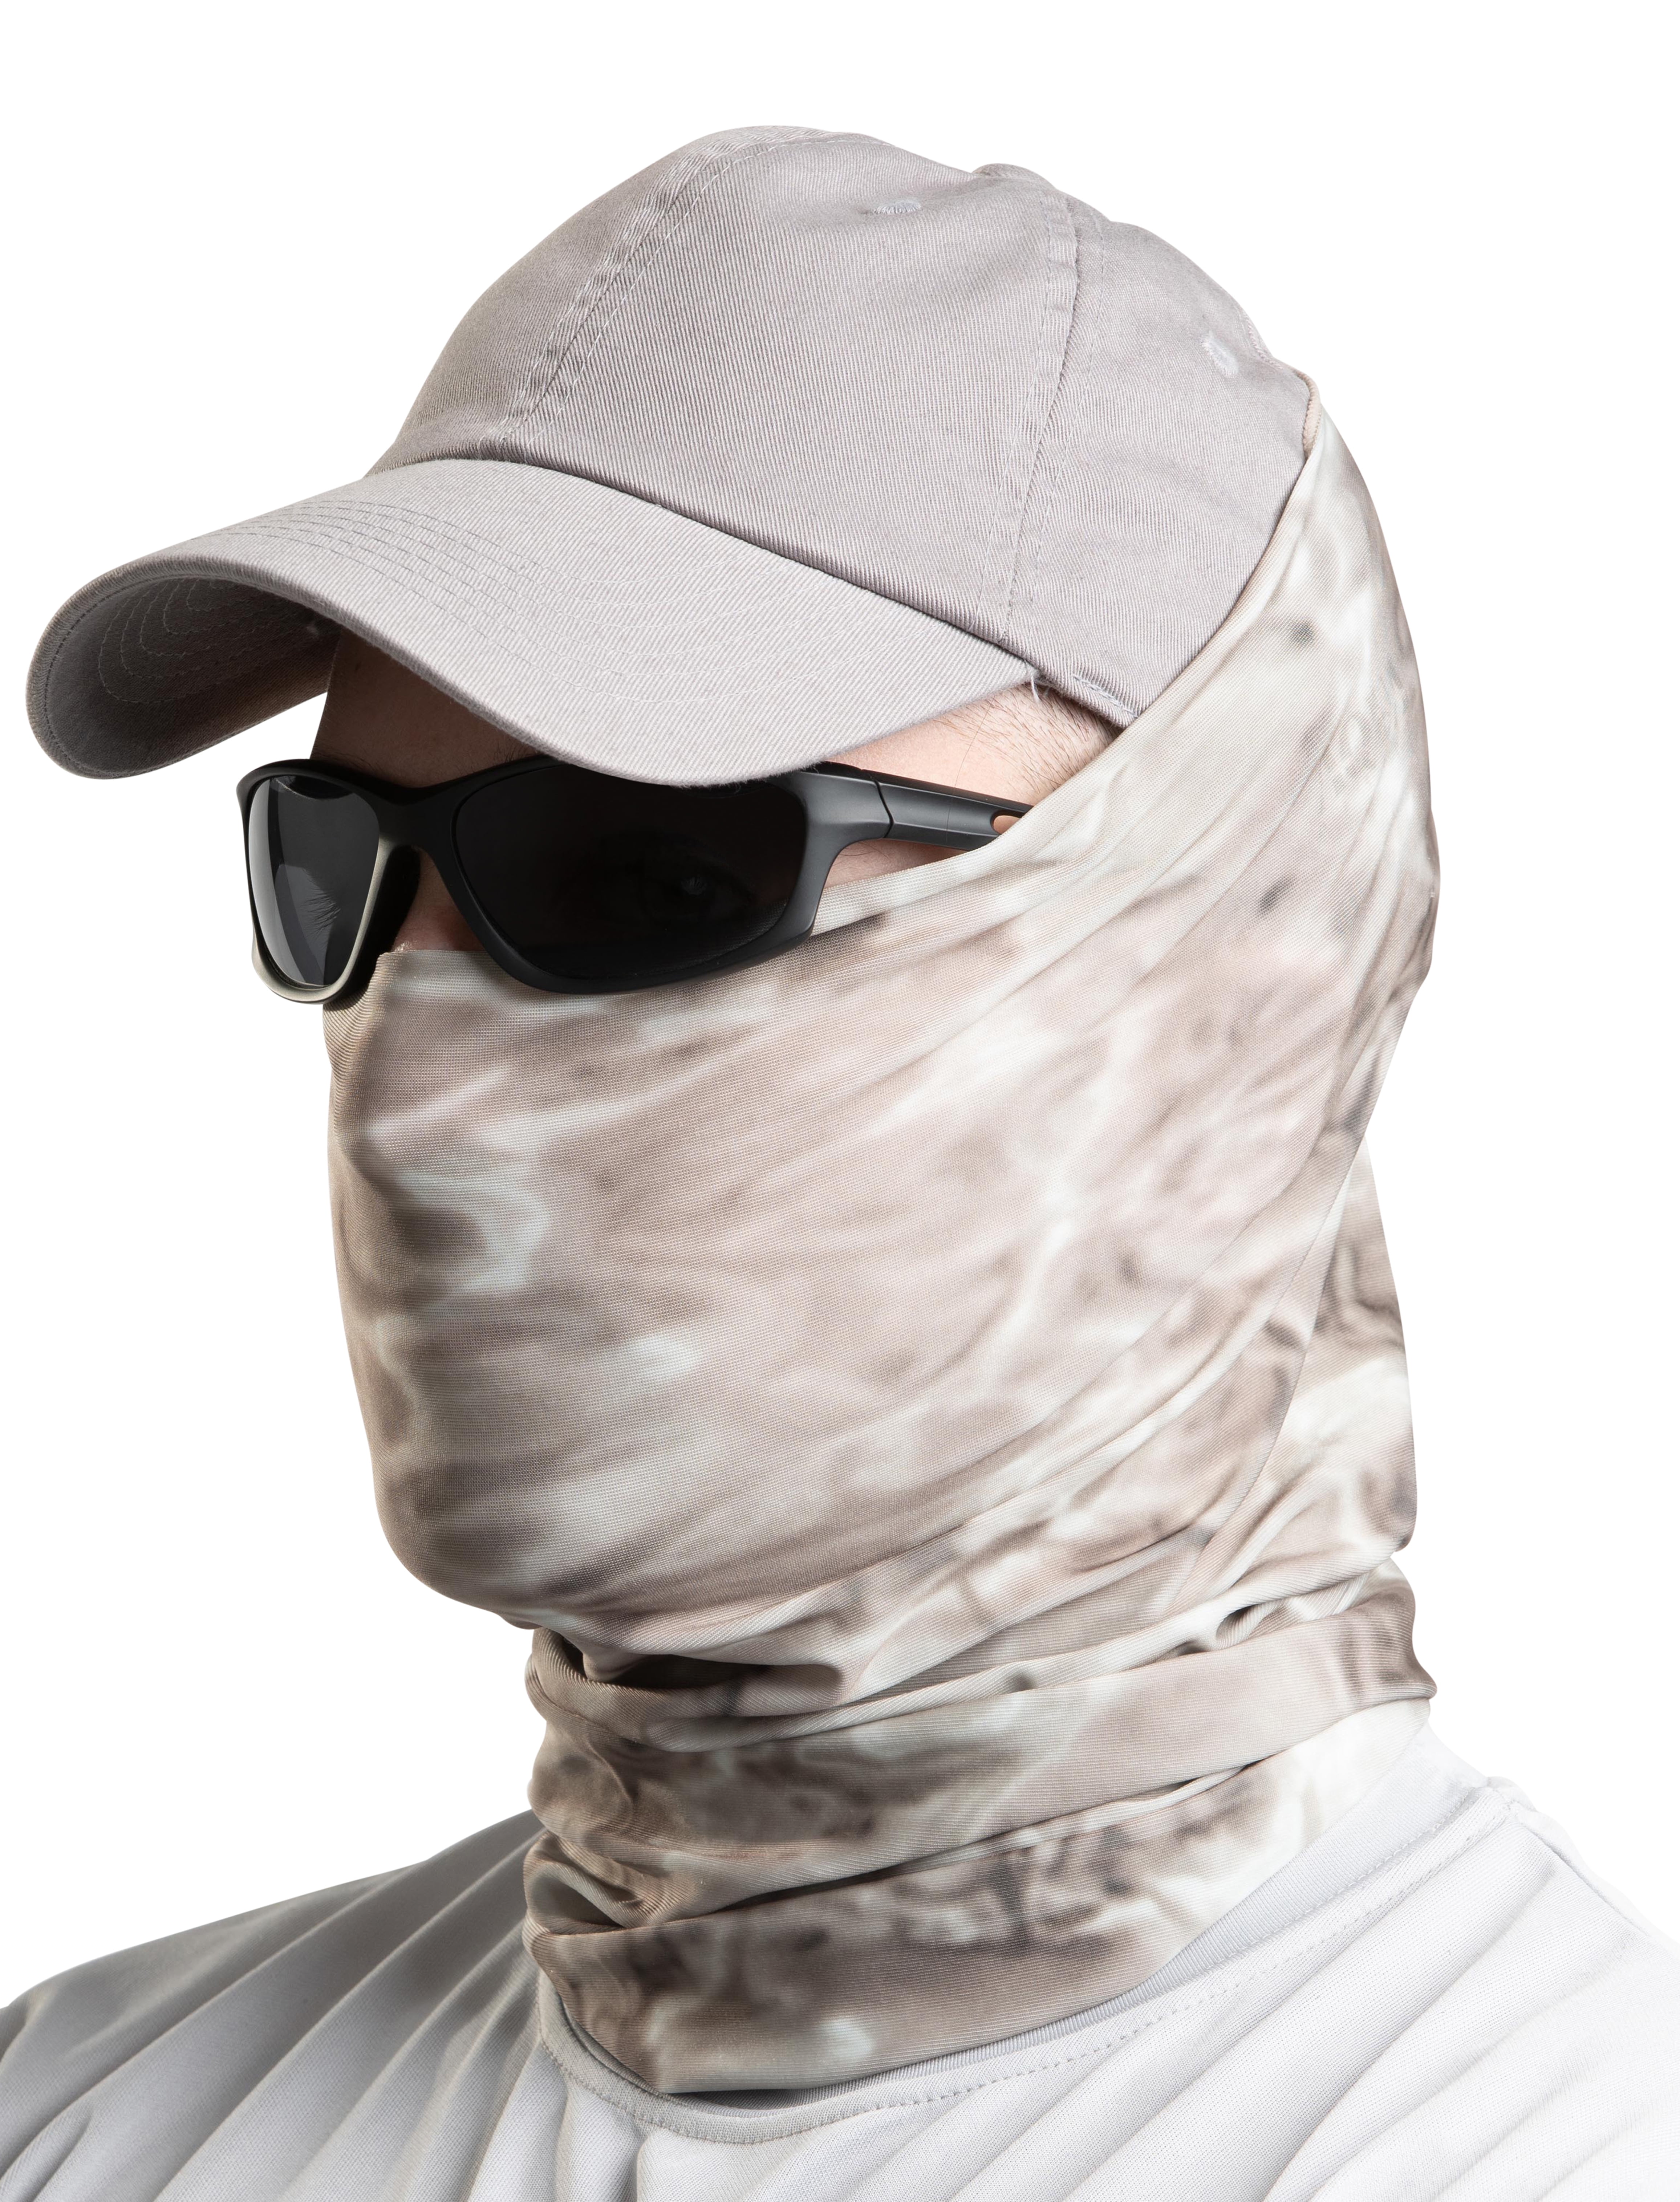 Details about   Outdoor Balaclava Face Mask Sun Shield Anti-UV collar leggings fishing scarf 